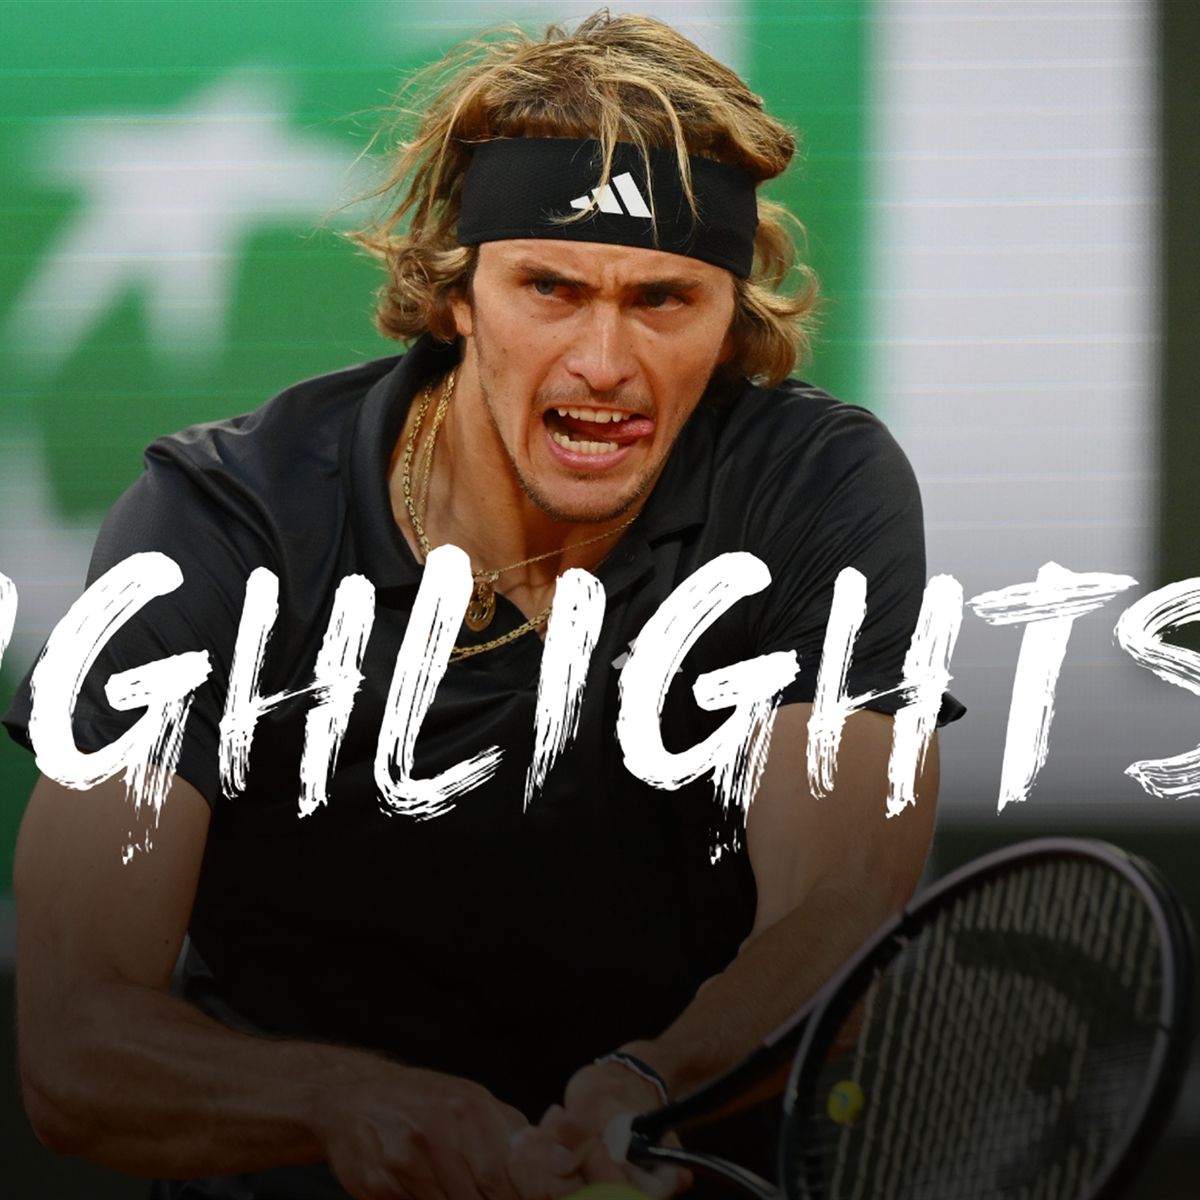 French Open highlights Alexander Zverev beats Grigor Dimitrov in straight sets to reach quarters at Roland-Garros - Tennis video